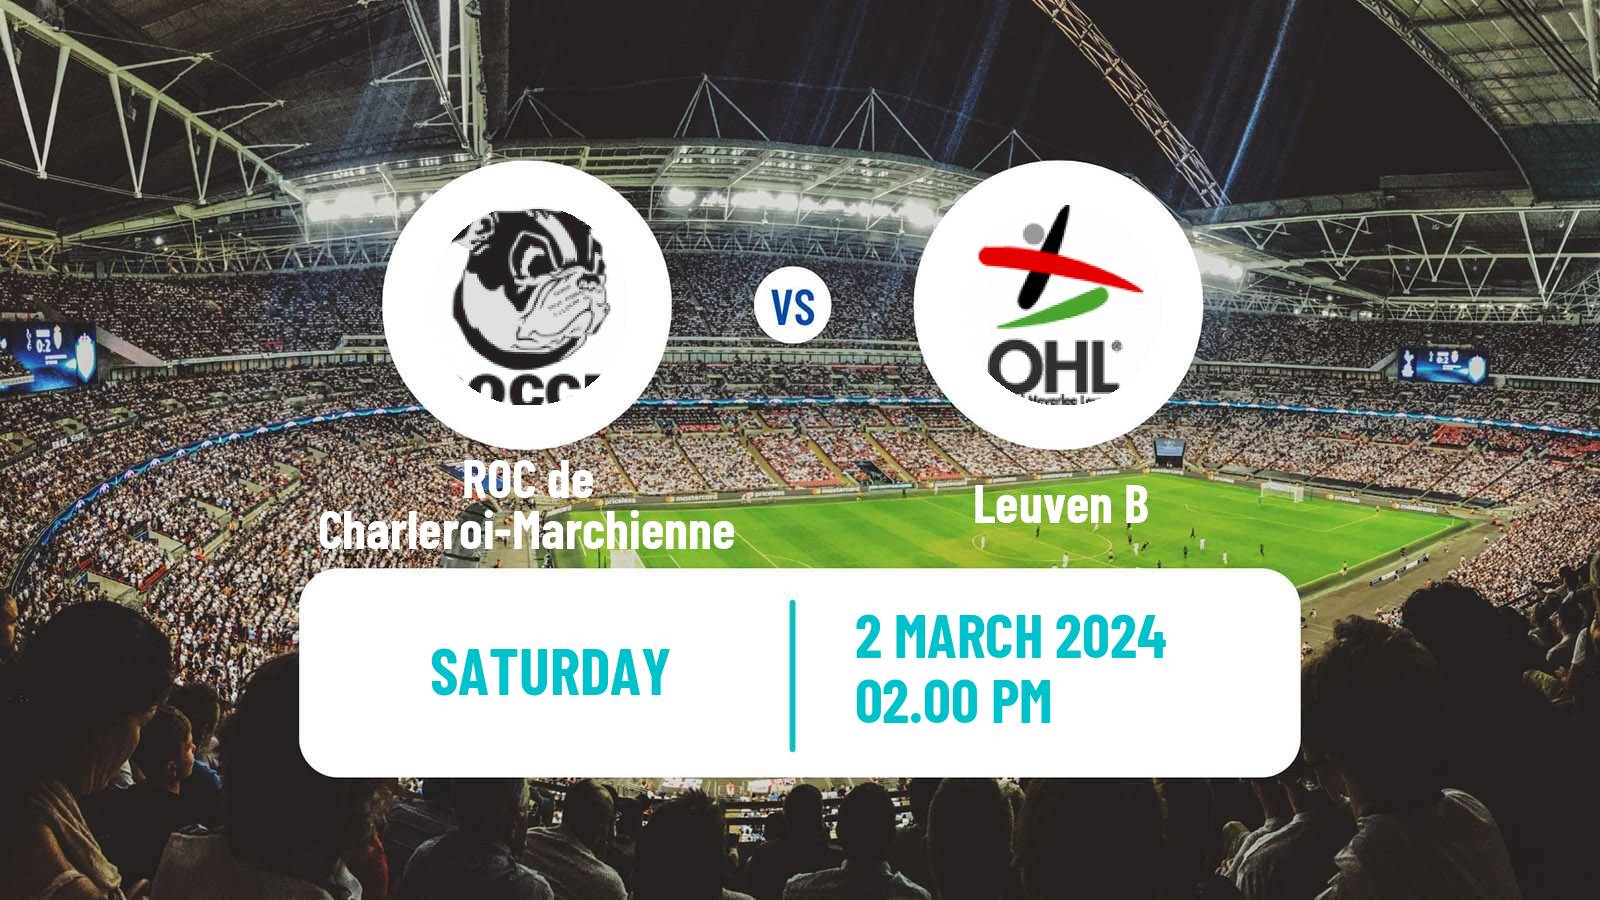 Soccer Belgian National Division 1 ROC de Charleroi-Marchienne - Leuven B